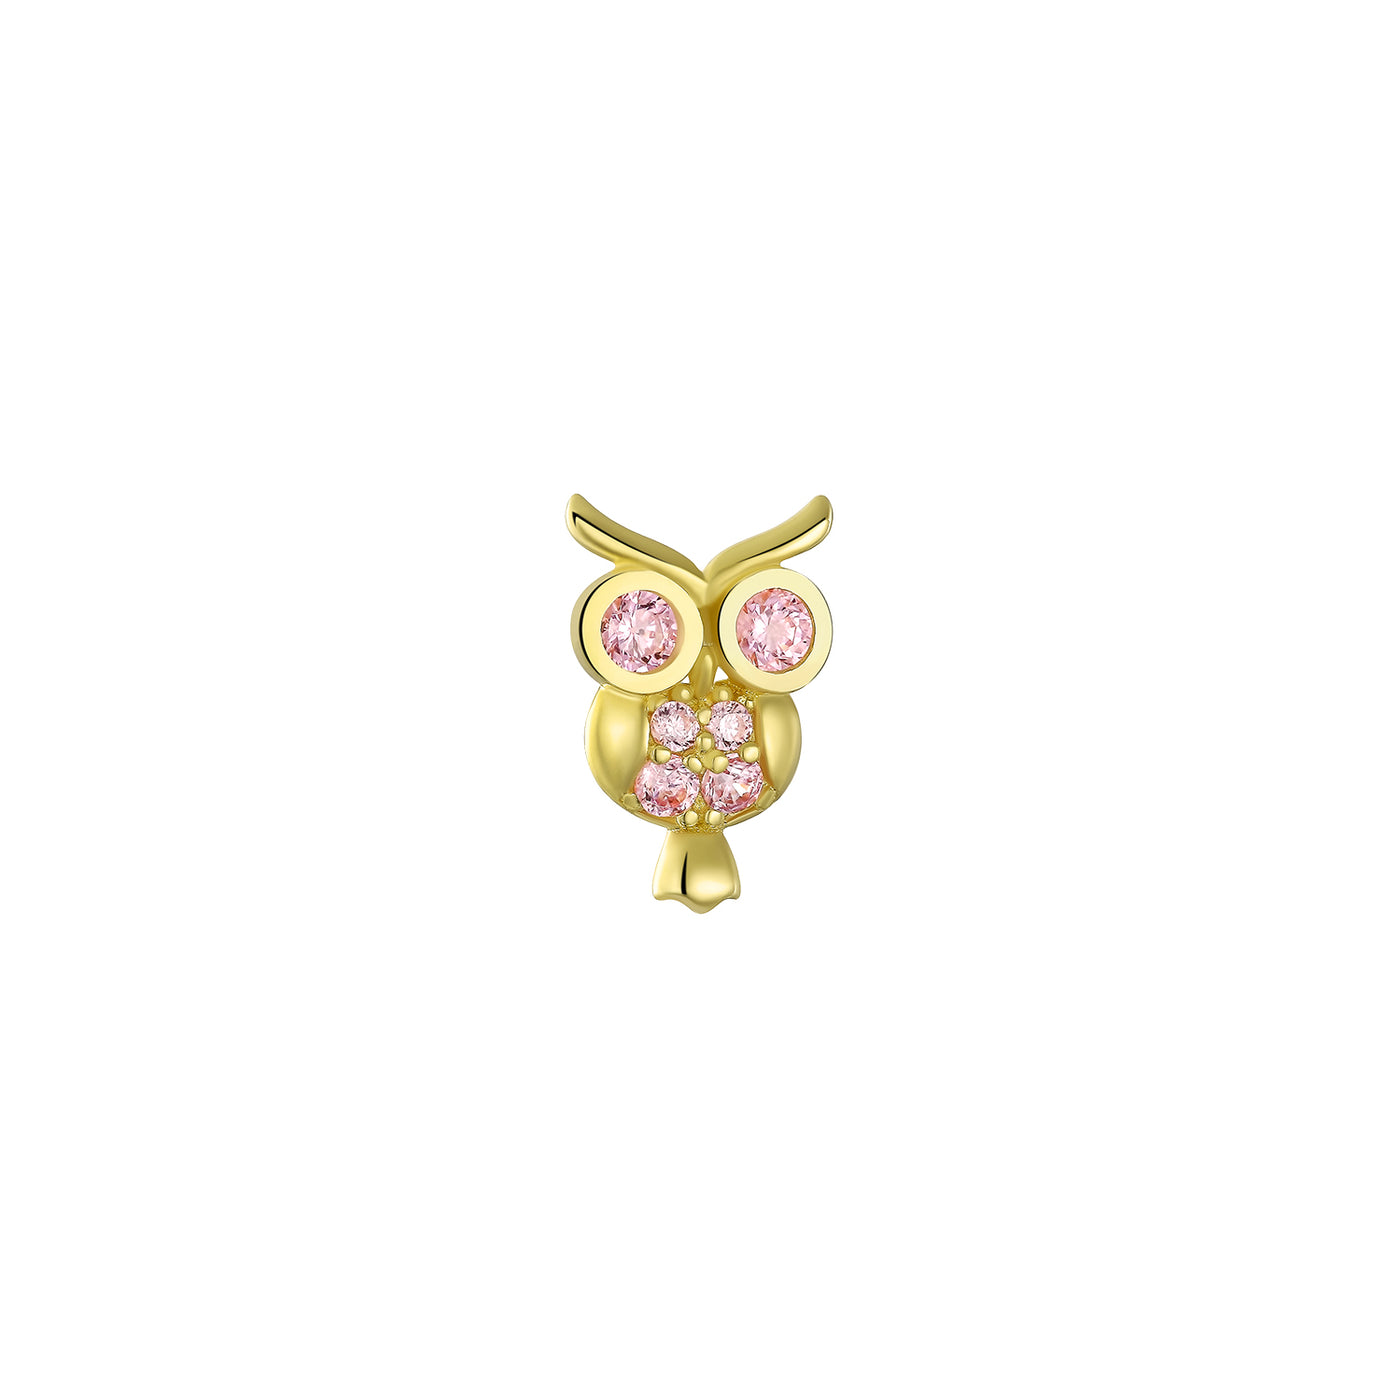 Oct-Pink Owl 1P